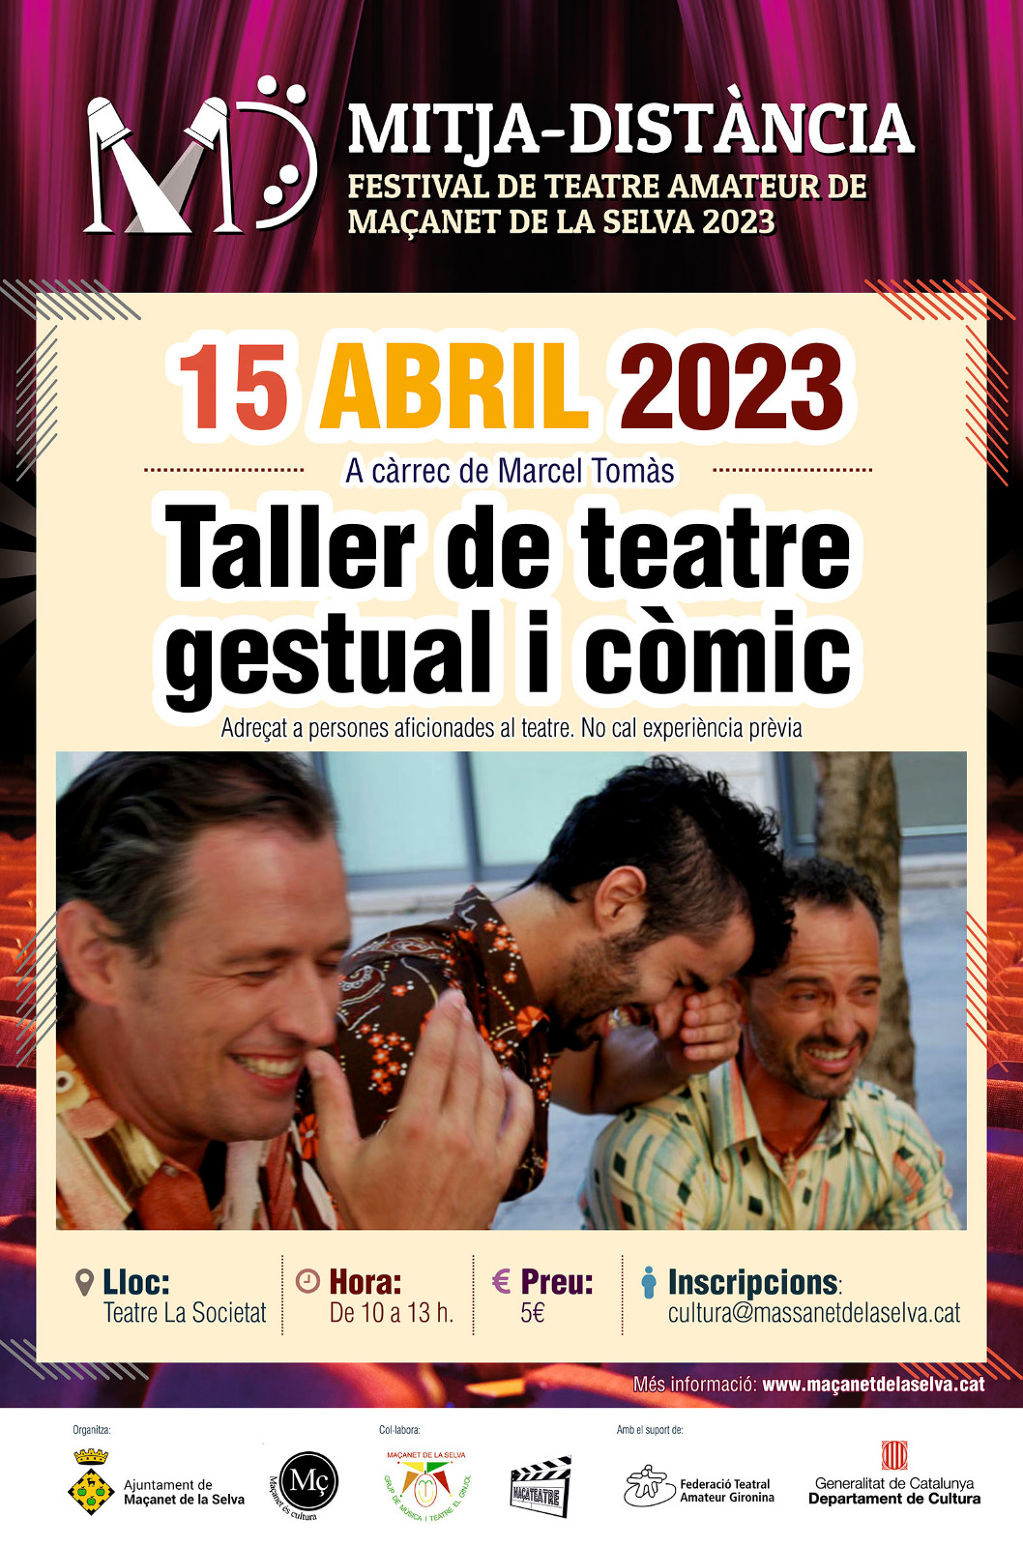 Taller de teatre gestual i còmic - whatsapp-image-2023-04-11-at-21.44.19.jpeg